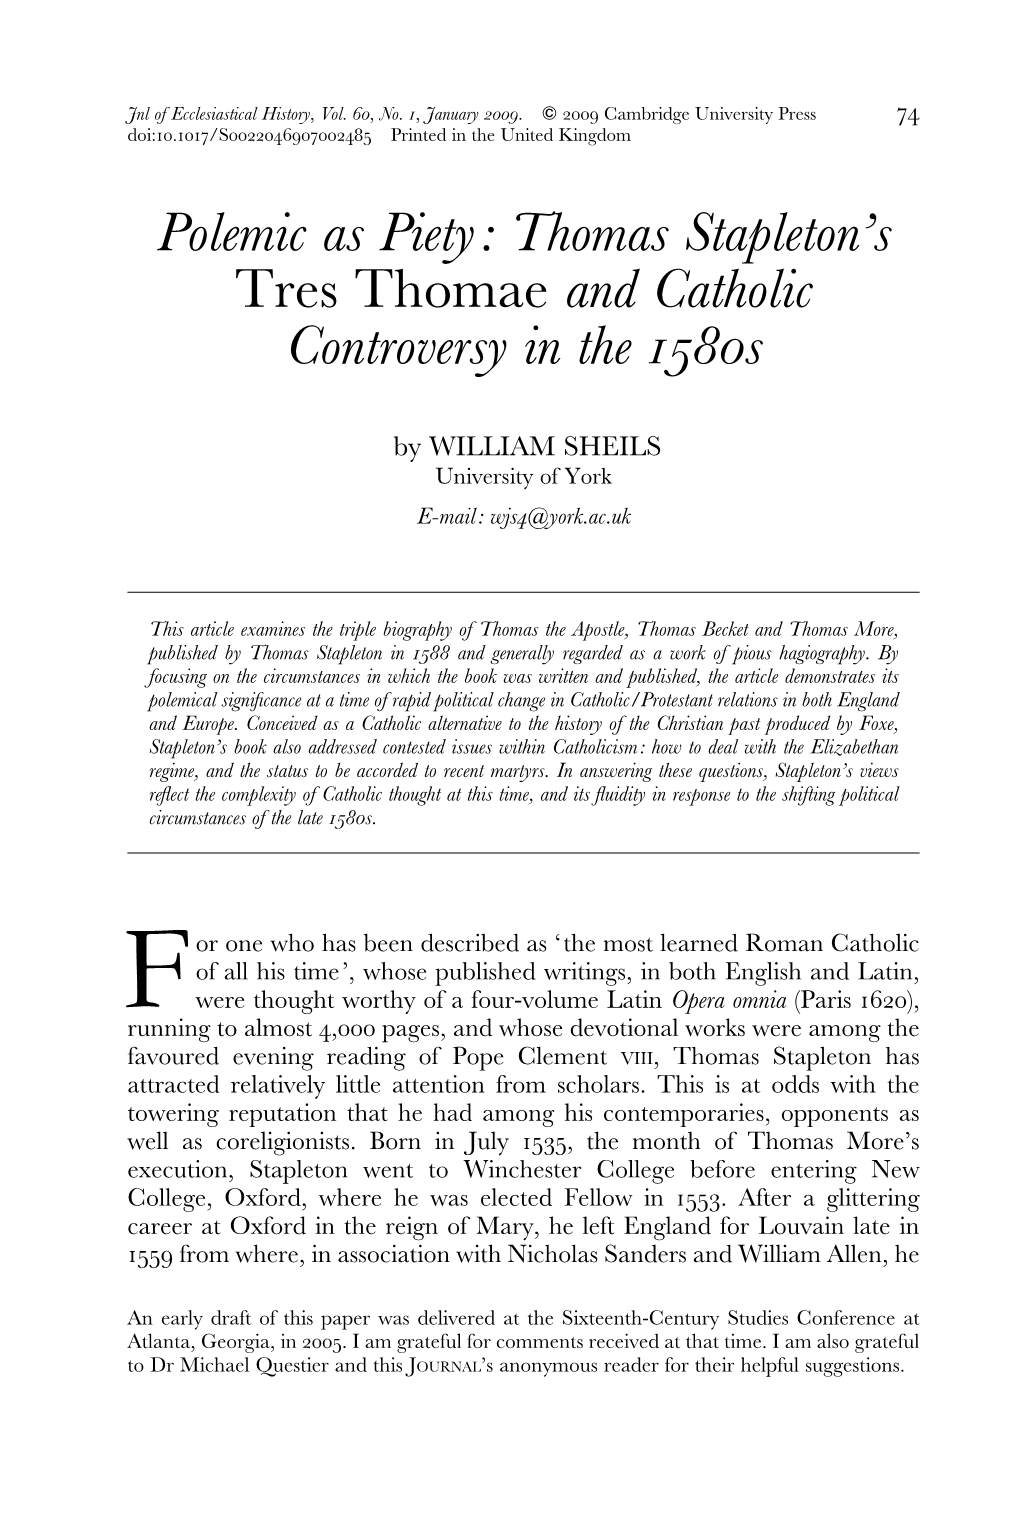 Thomas Stapleton's Tres Thomae and Catholic Controversy in the 1580S